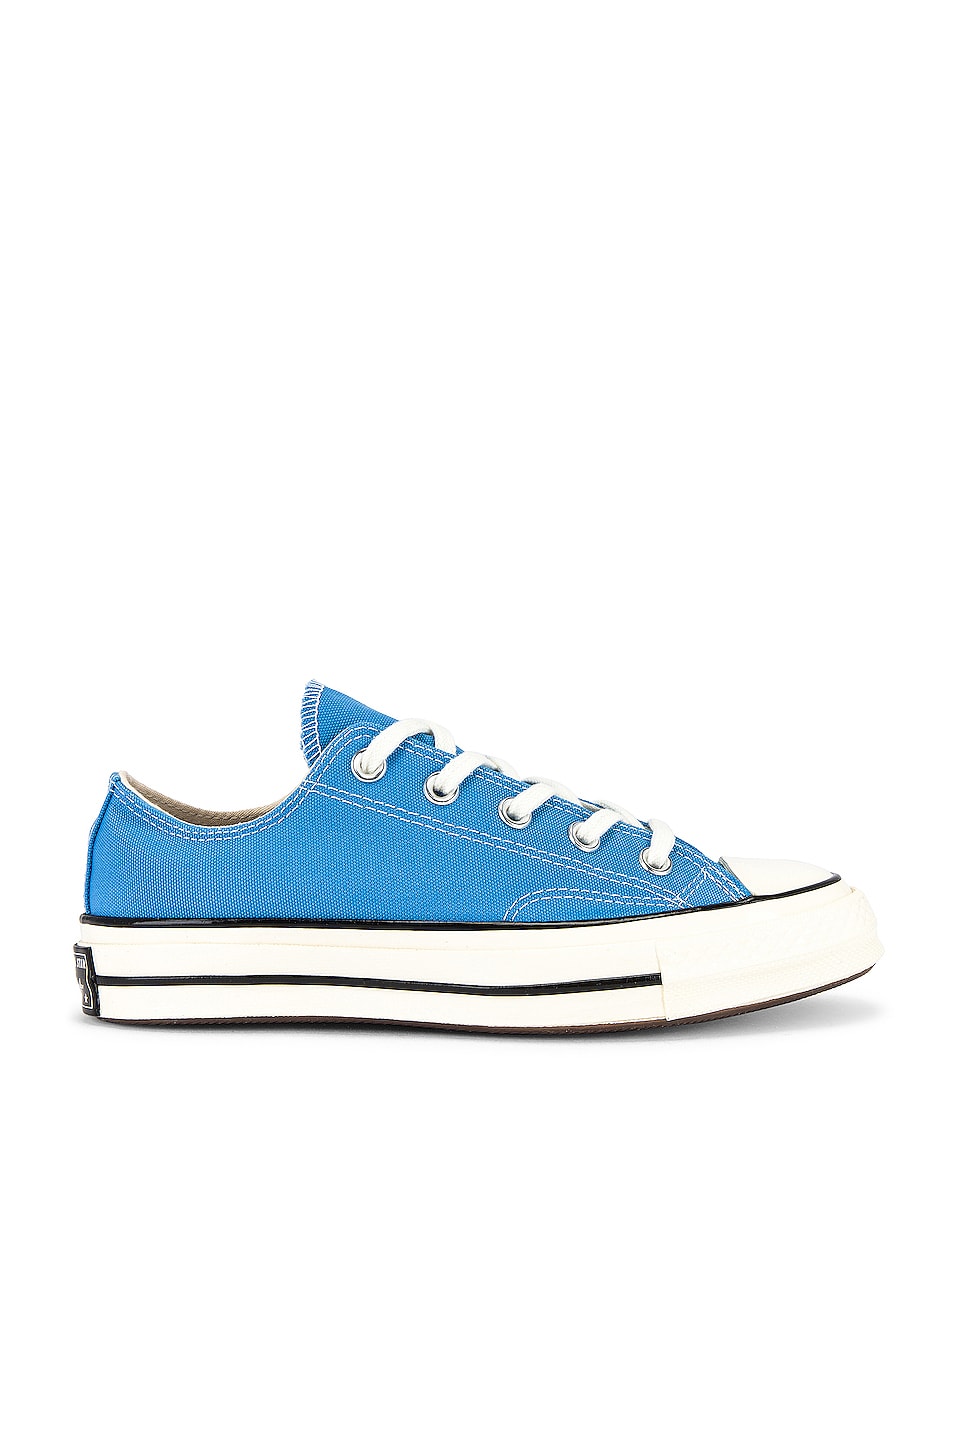 Converse Chuck 70 Sneaker in University Blue, Egret, & Black | REVOLVE